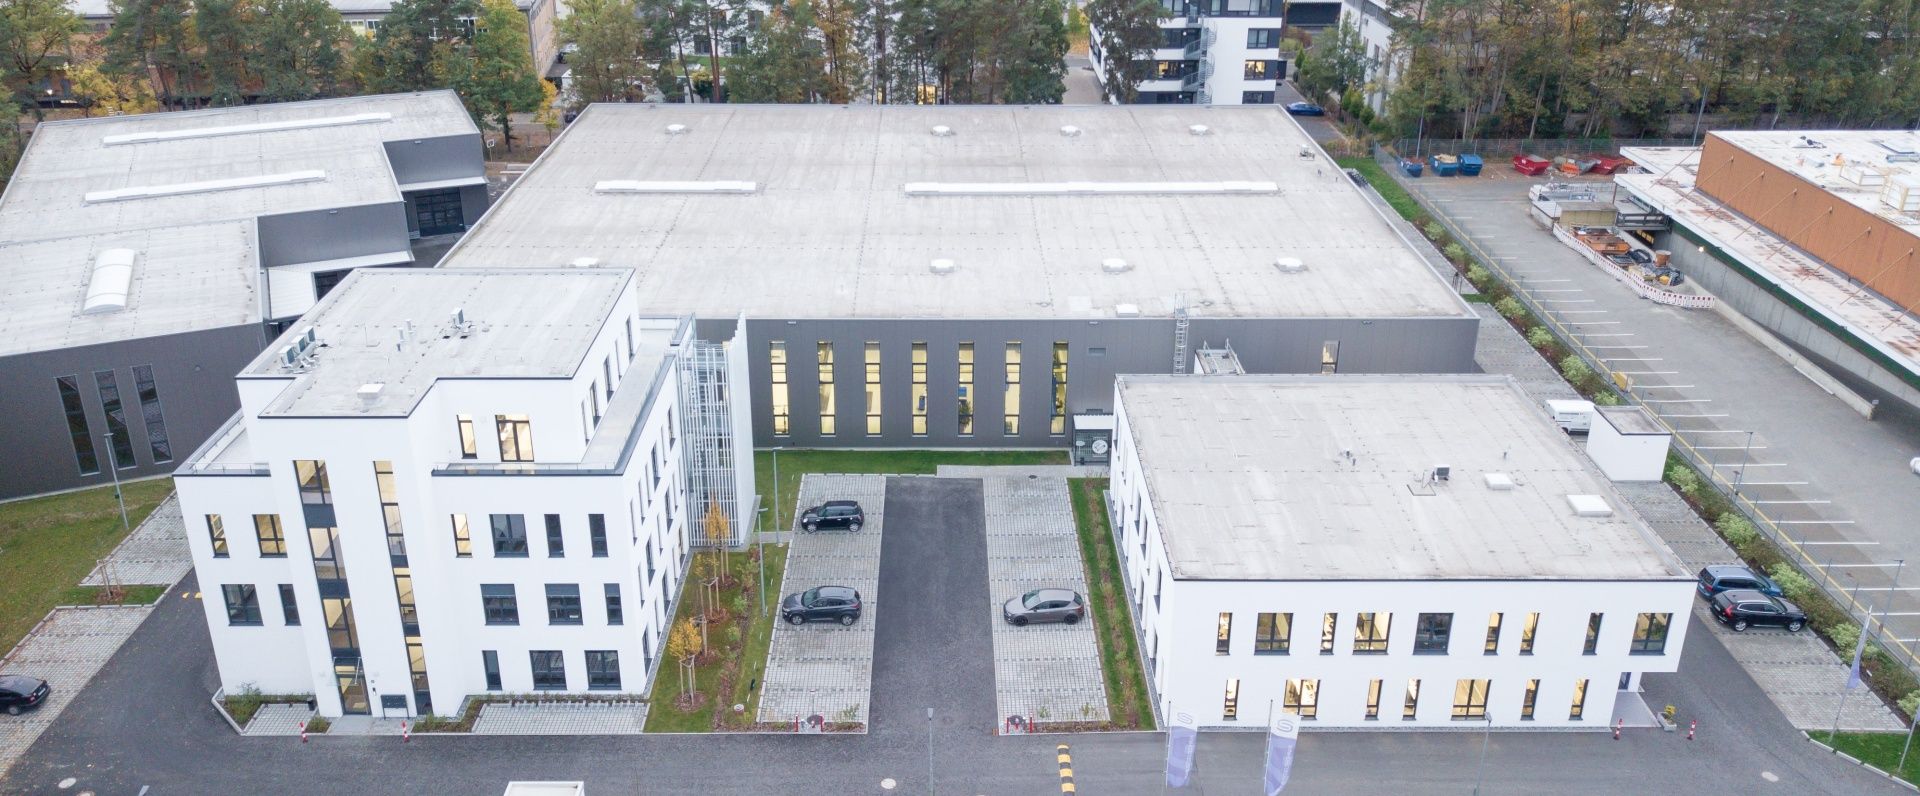 S+S Regeltechnik entrance company building and site overview